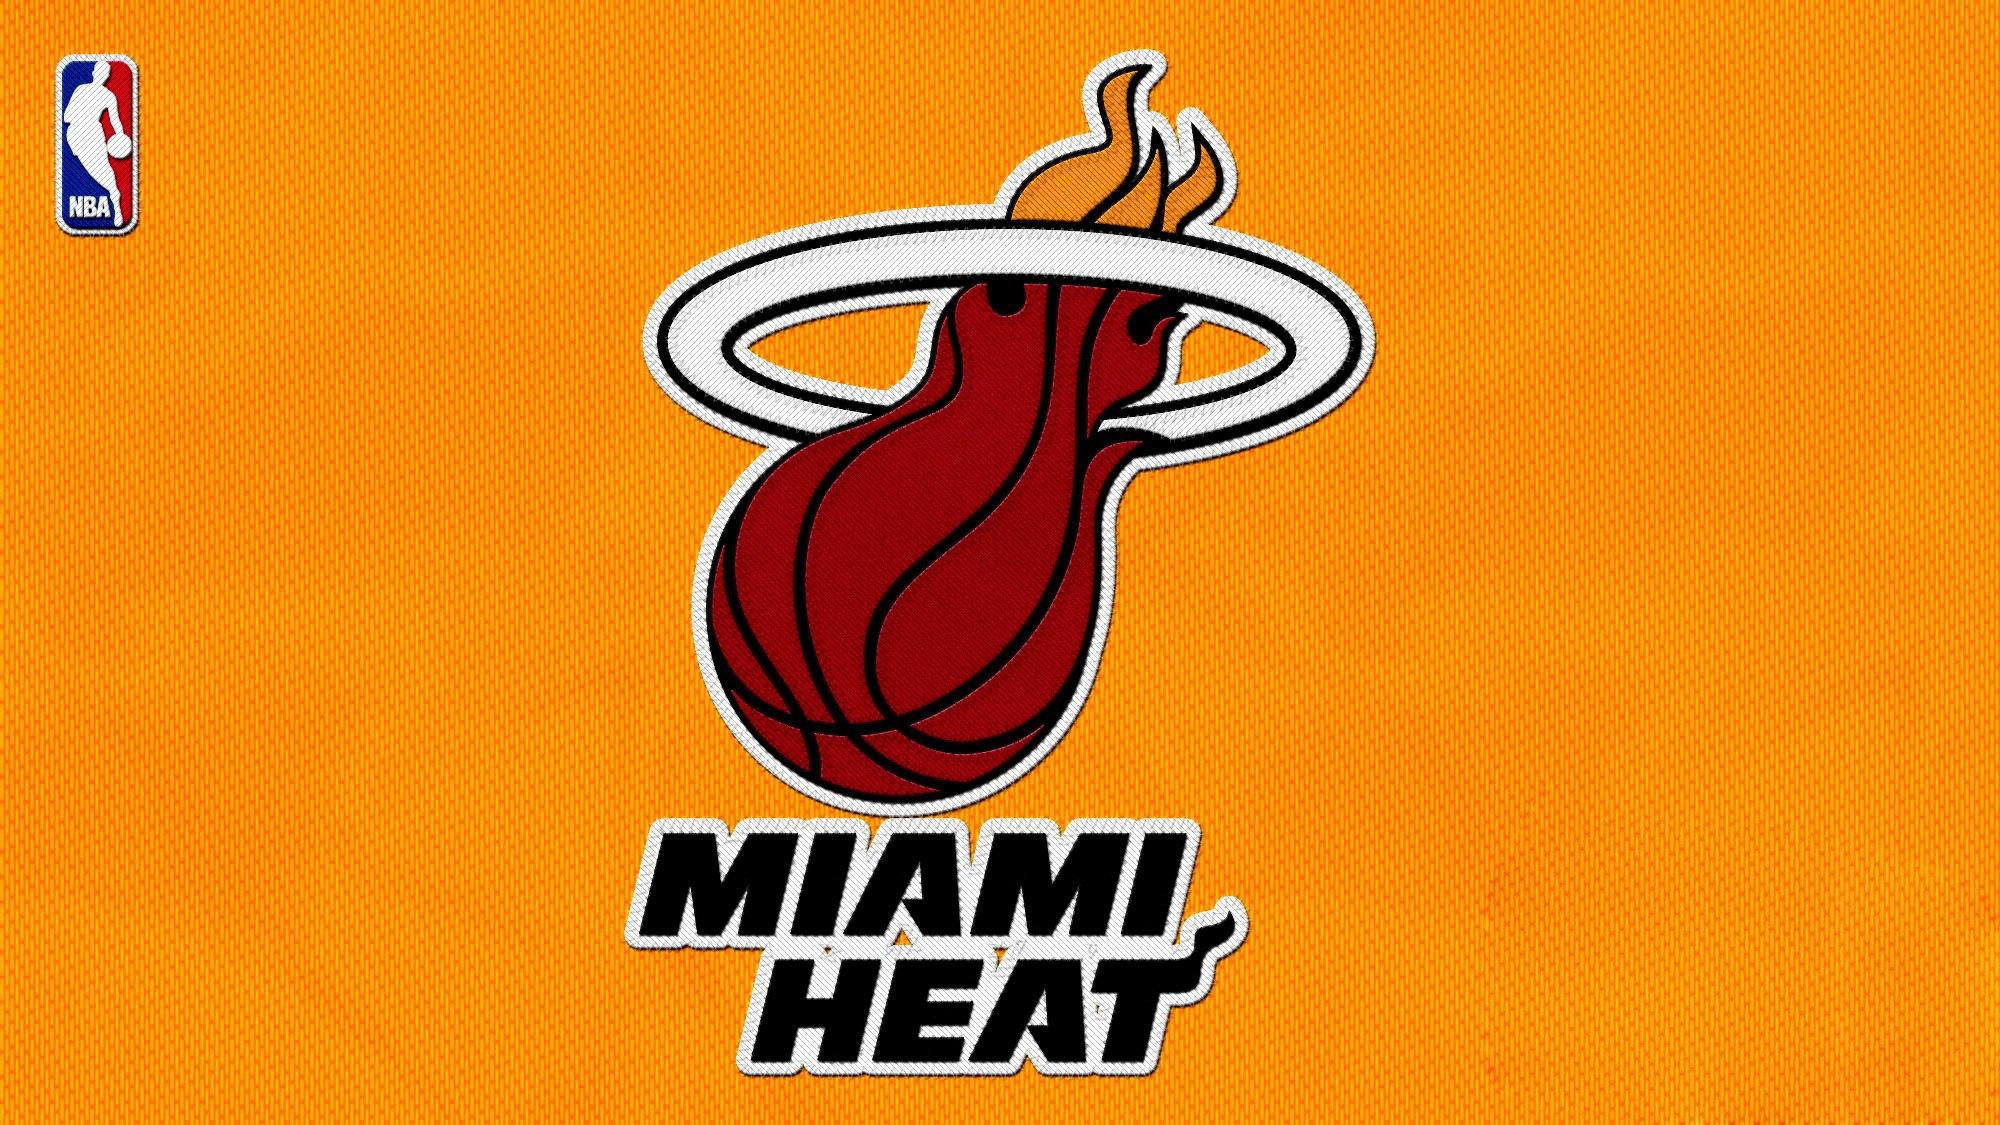 2000x1125  Miami heat wallpaper hd photos. Download Â· Logo ...